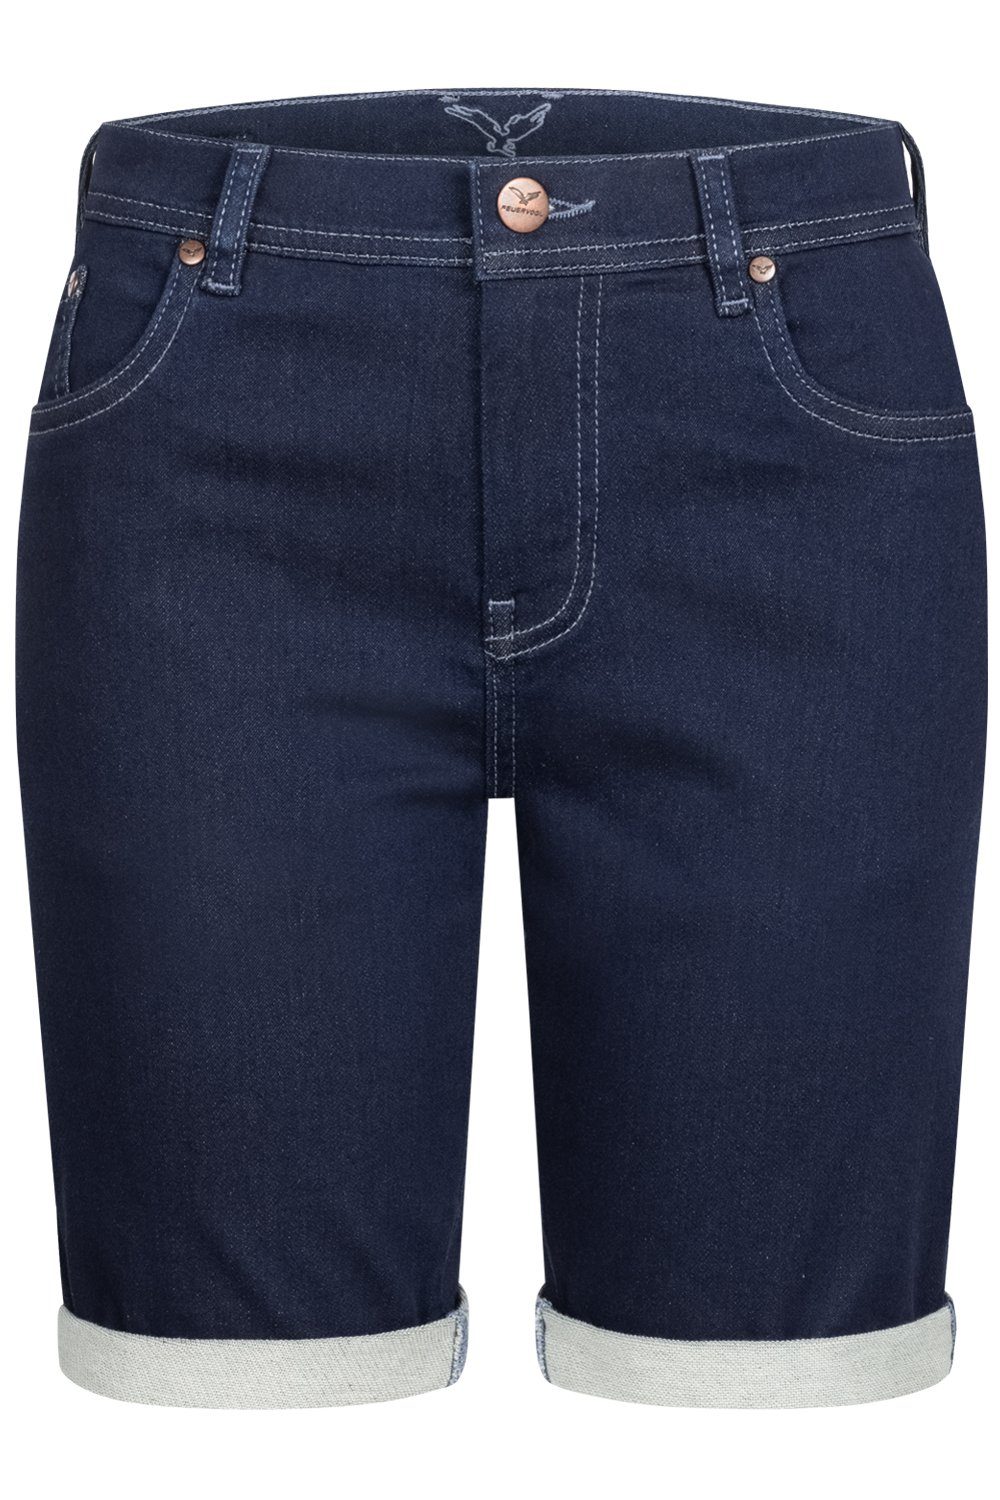 Blue Feuervogl Bermuda, Classic 5-Pocket-Style, fv-Wed:ding, Denim Unisex Summer Jeansbermudas